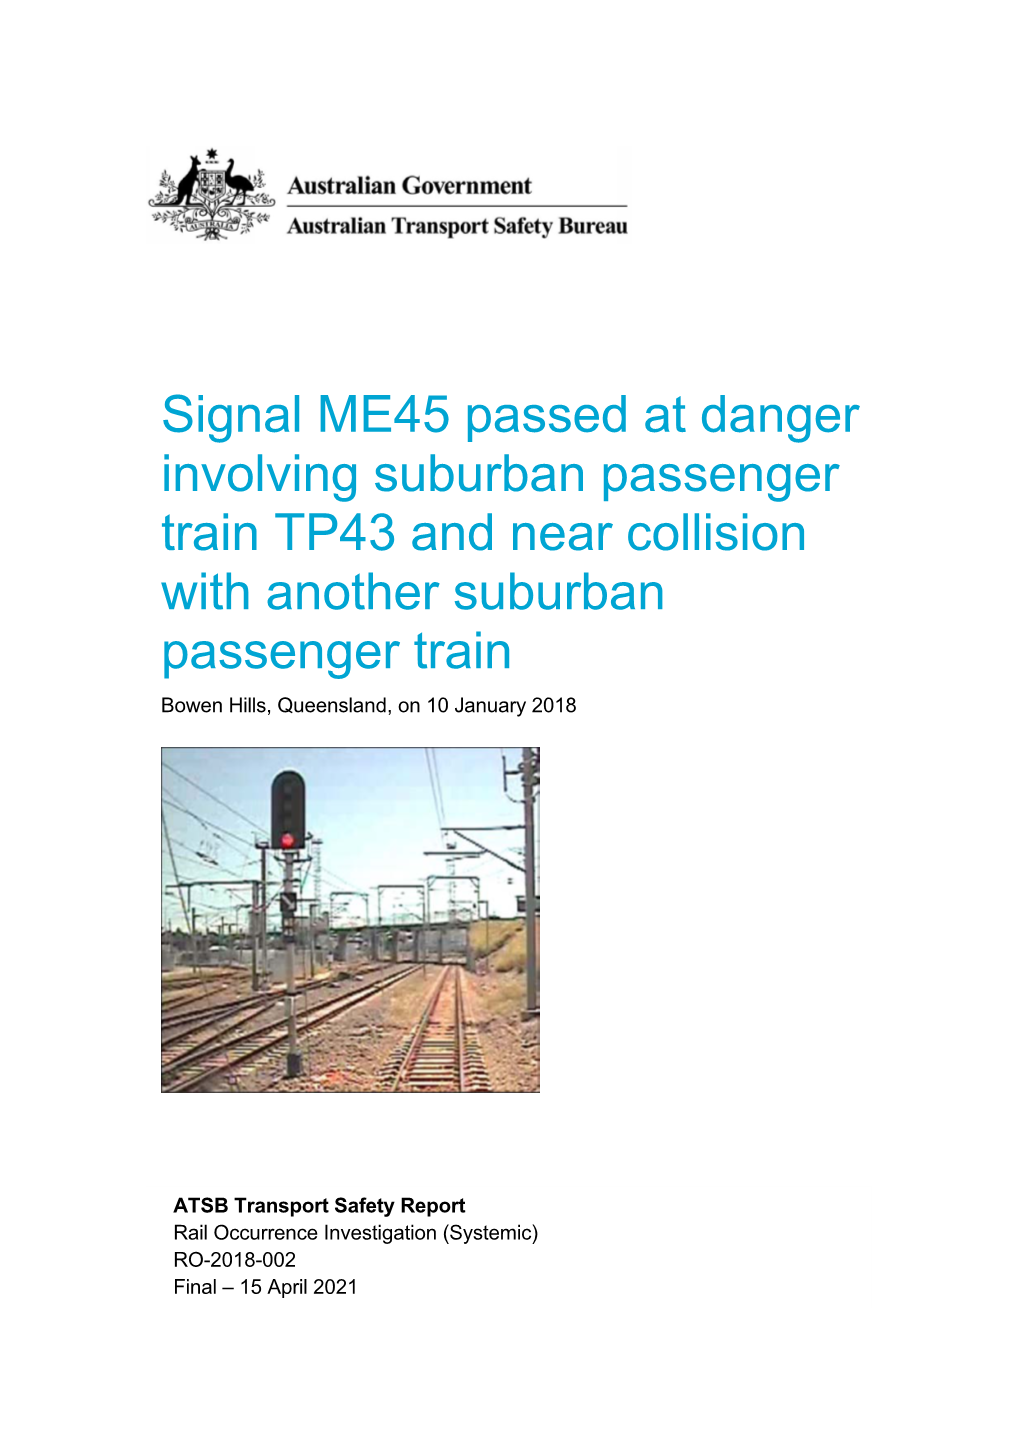 Signal ME45 Passed at Danger Involving Suburban Passenger Train